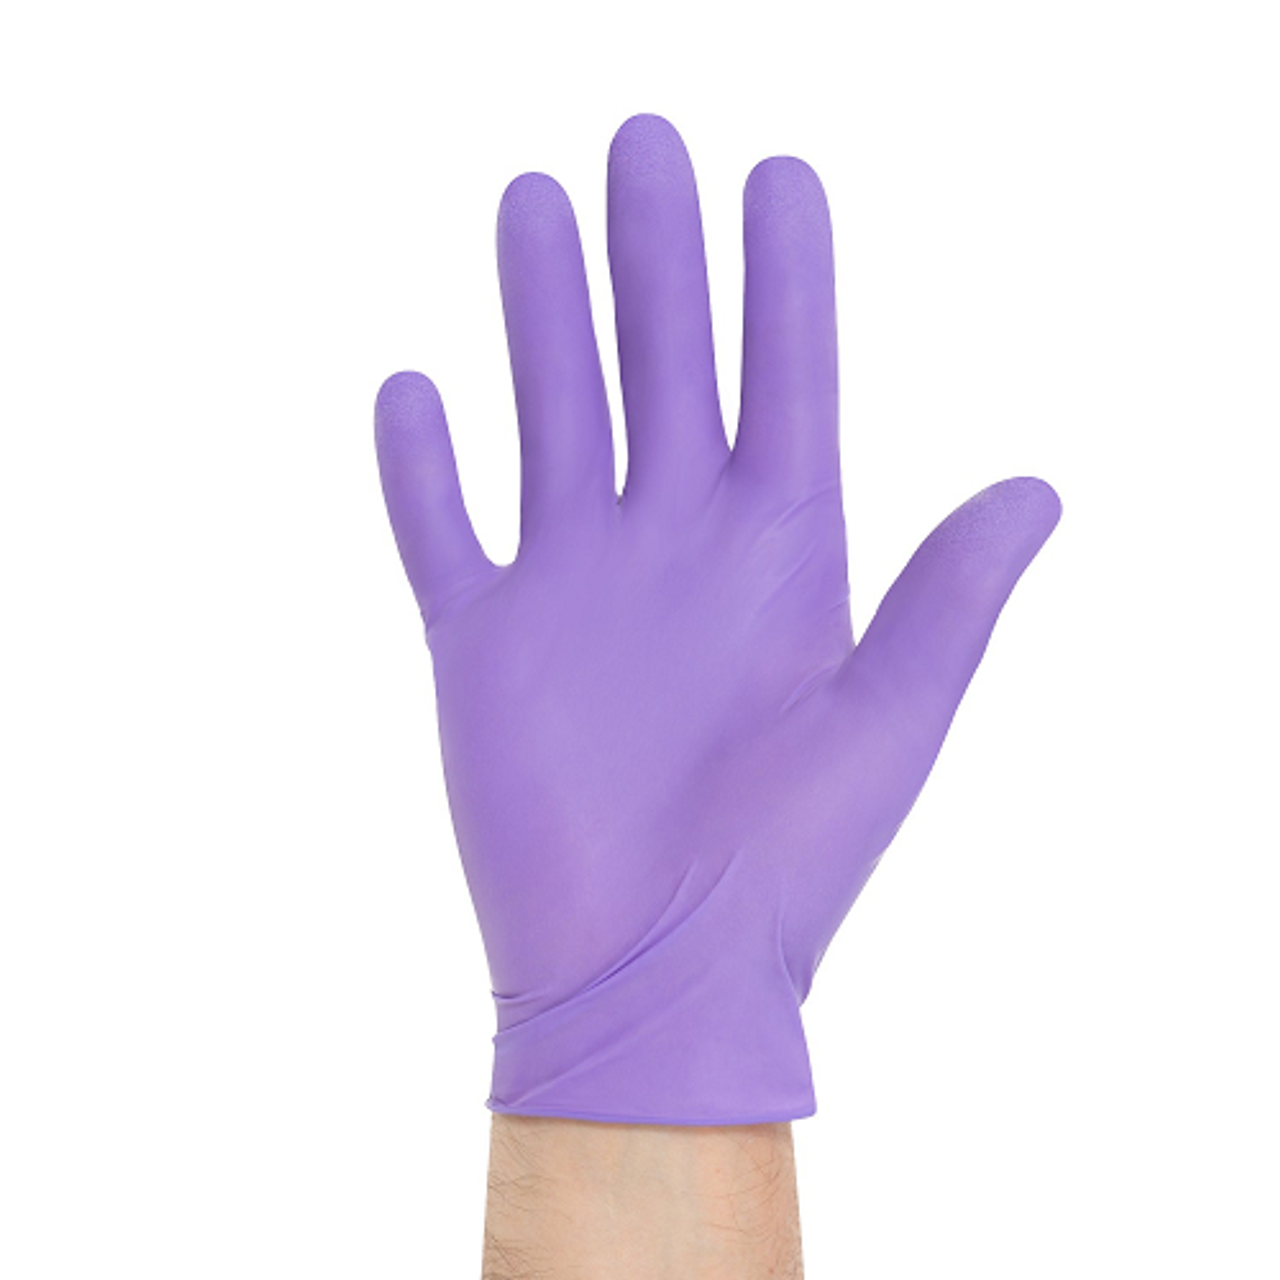 Halyard Purple Nitrile Exam Gloves, X-Small, 50/bx, 10 bx/cs